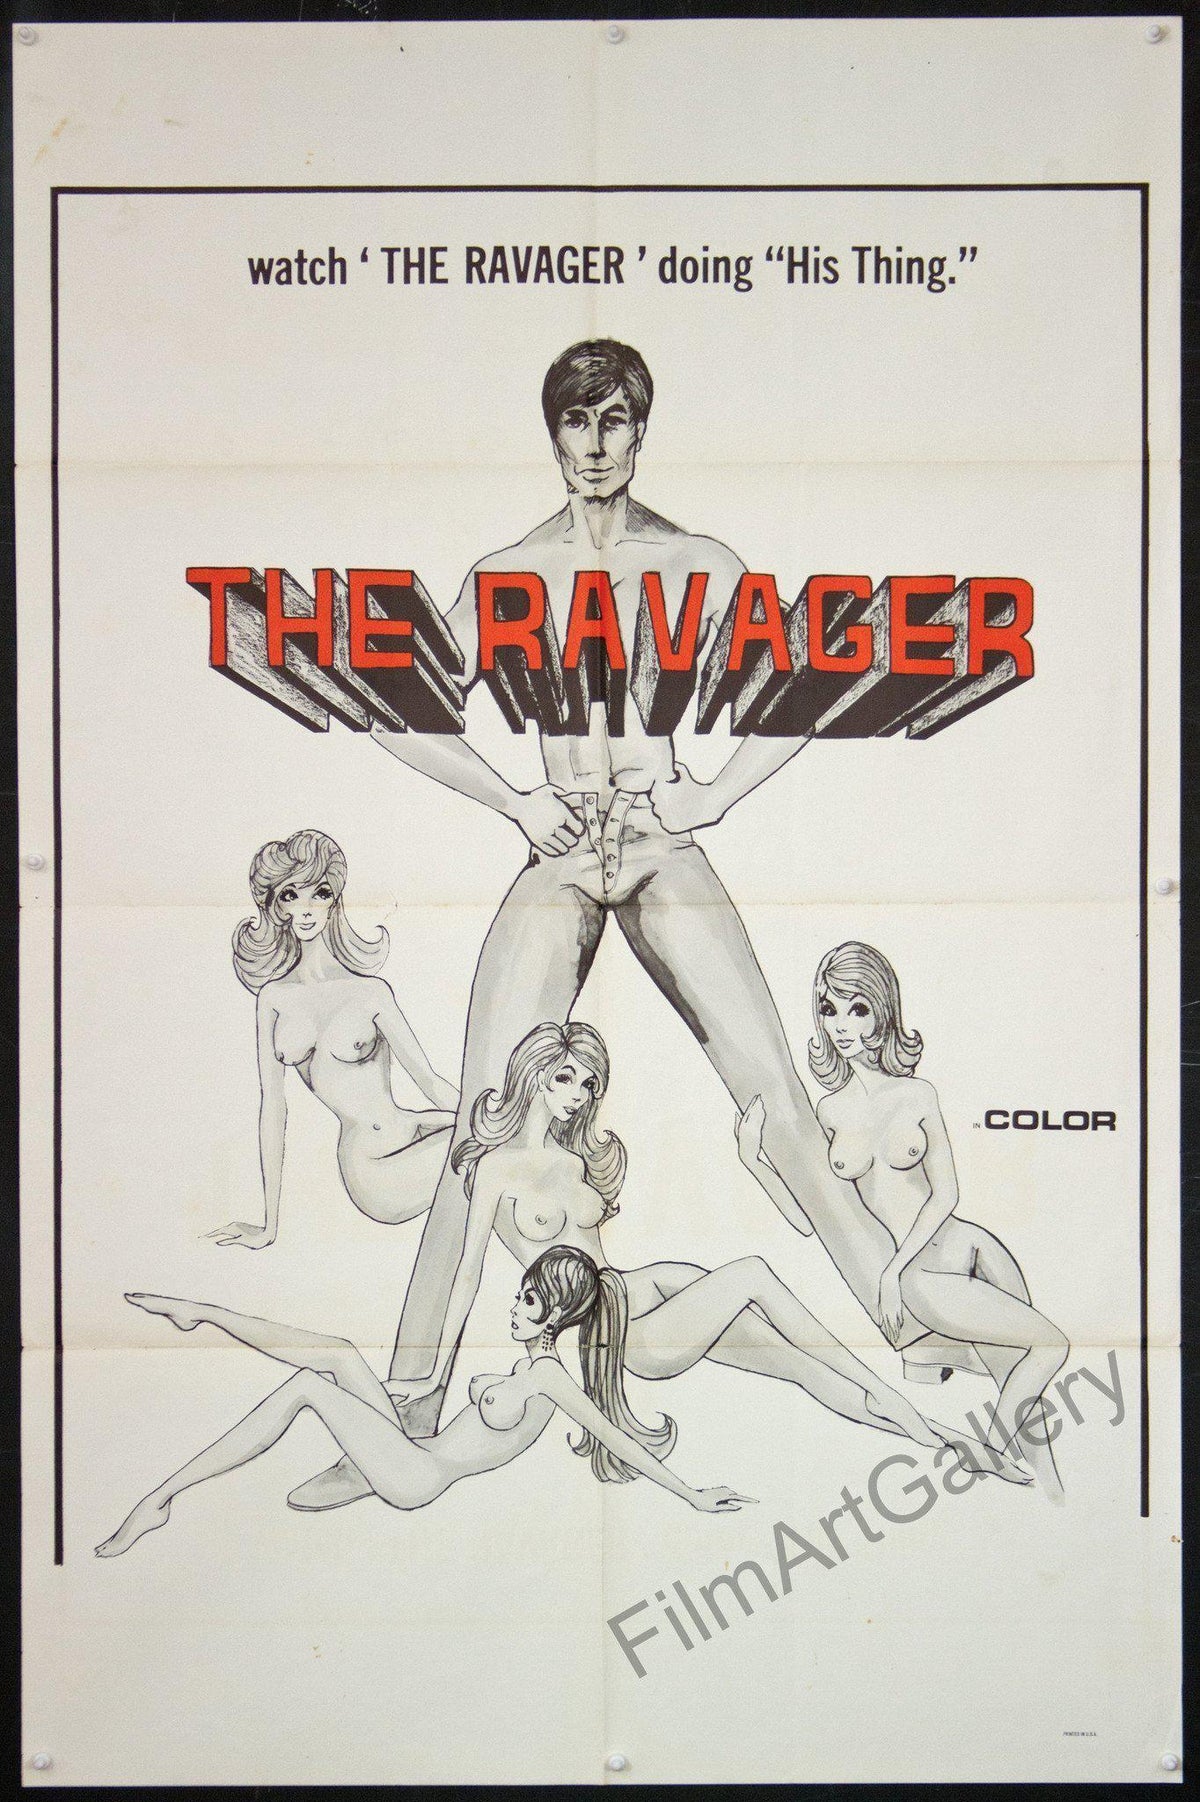 The Ravager 1 Sheet (27x41) Original Vintage Movie Poster